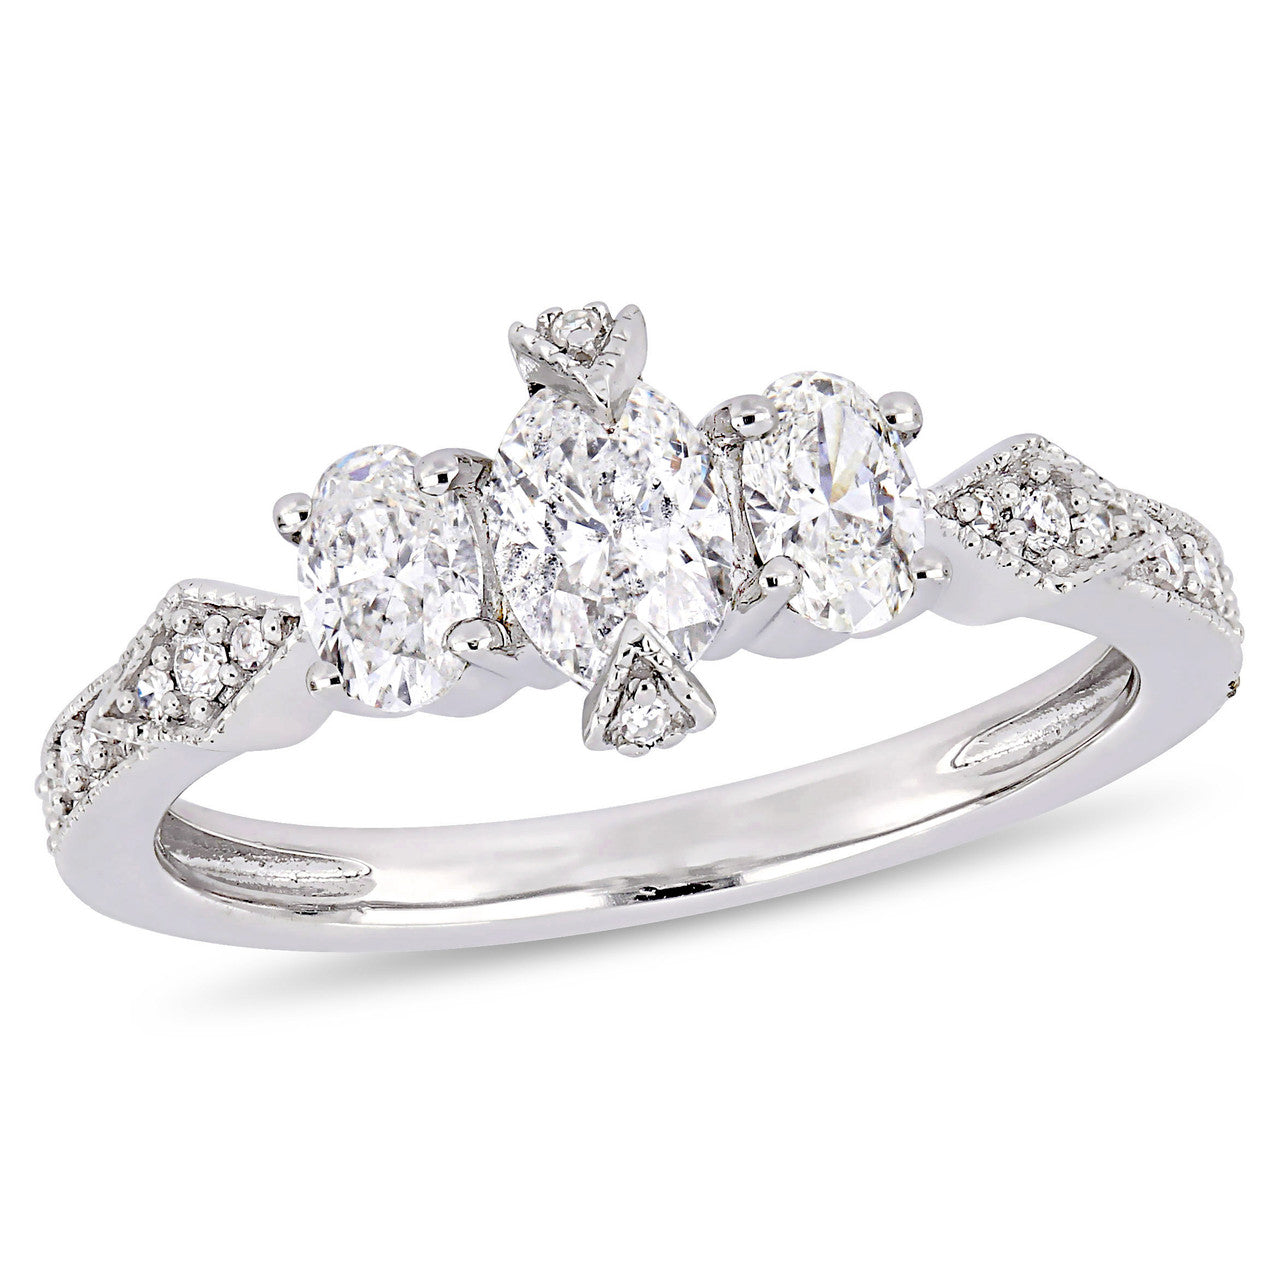 Ice Jewellery 7/8 CT Oval and Round Diamonds TW Fashion Ring 14k White Gold GH I1 - 75000004564 | Ice Jewellery Australia